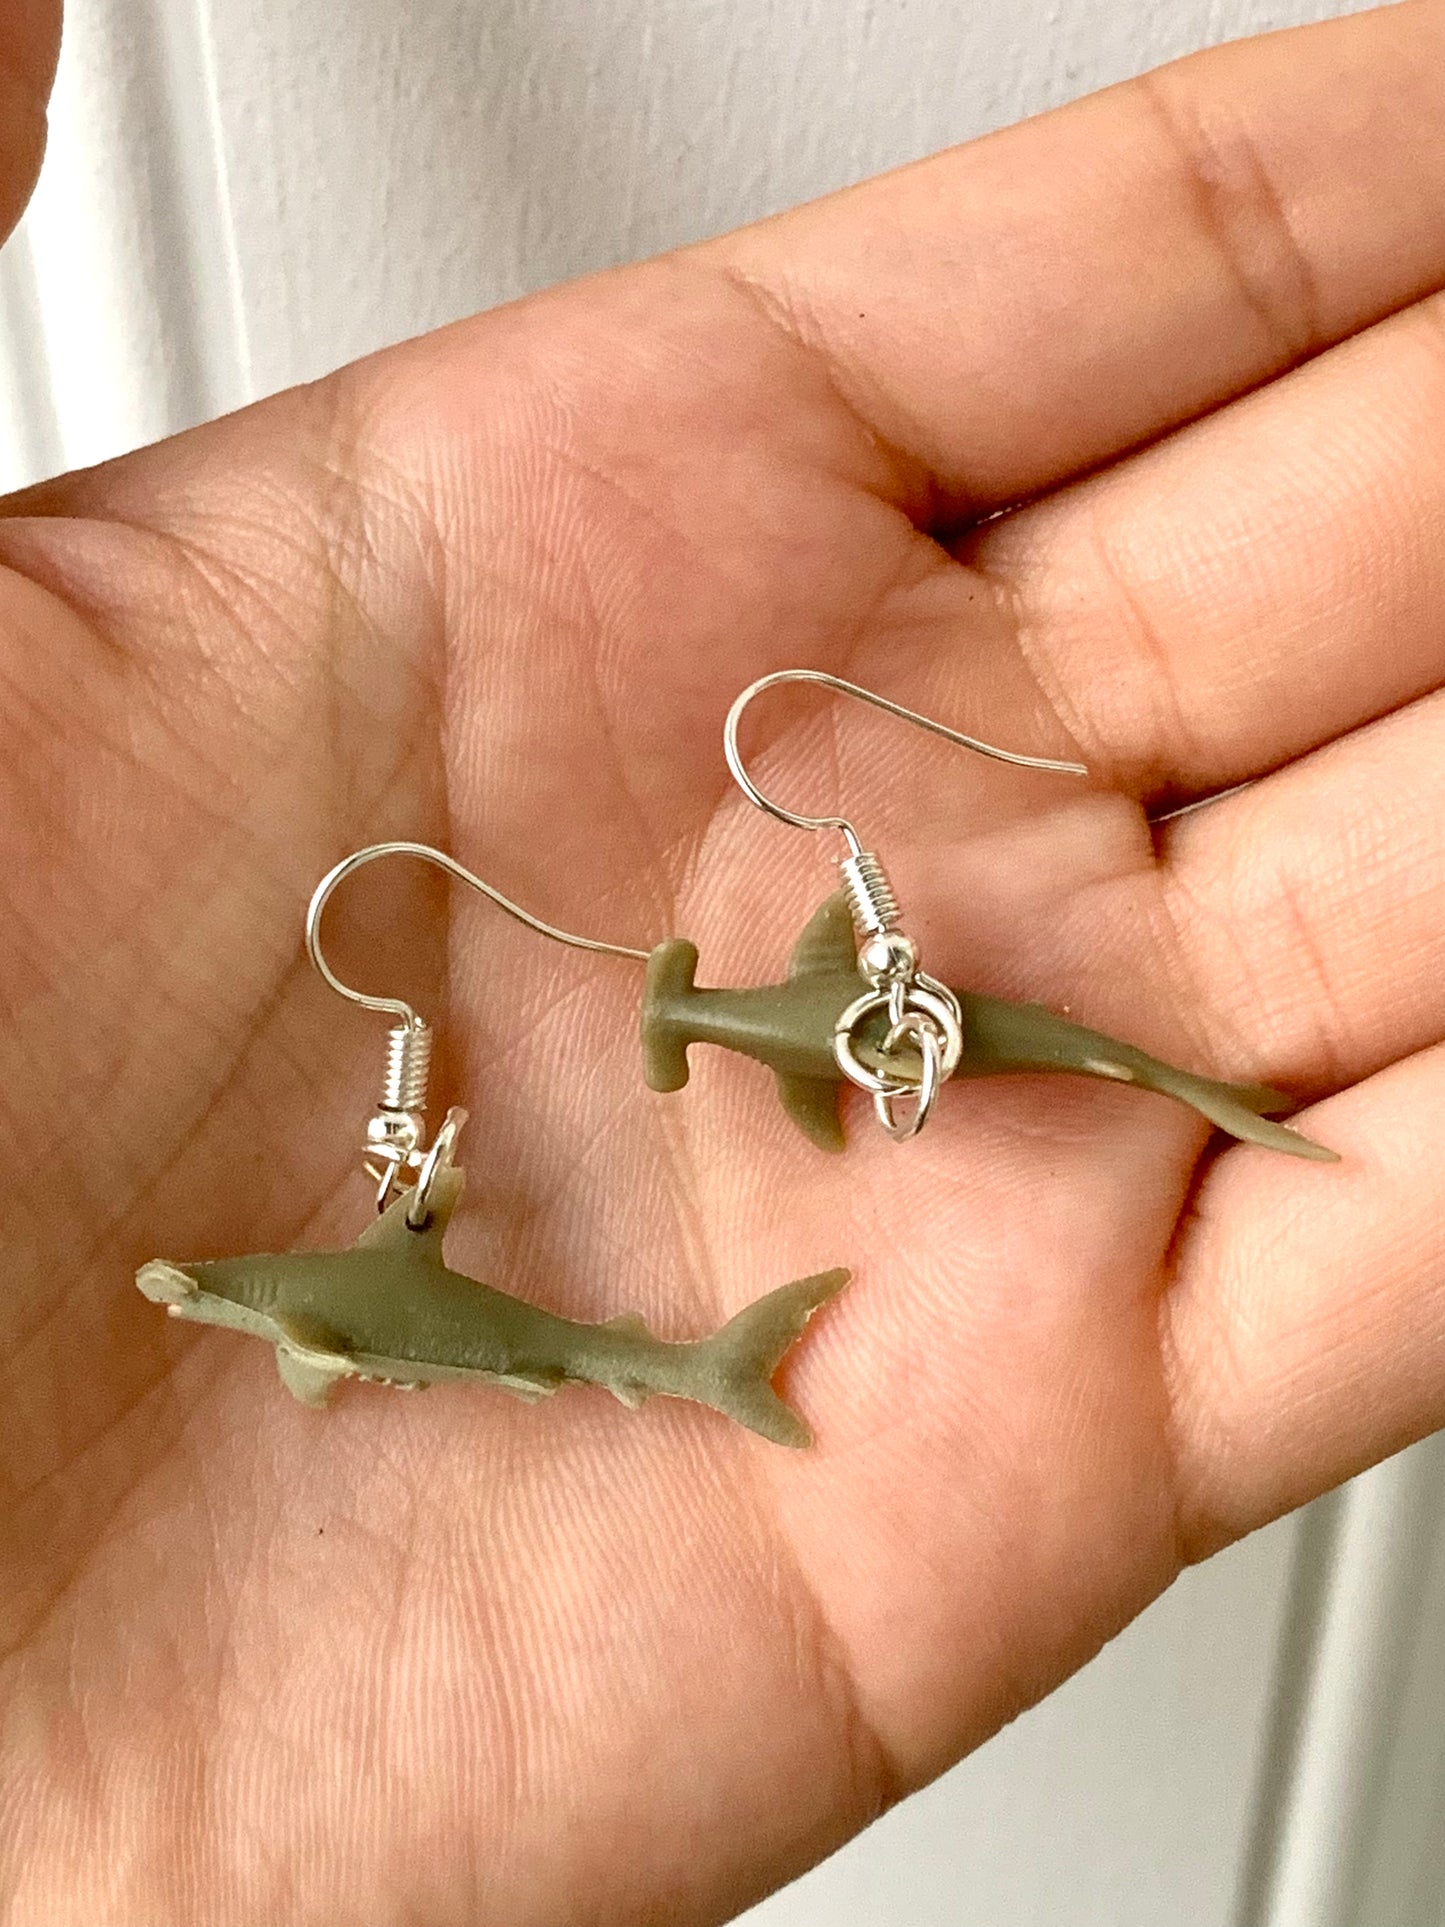 Mini Hammerhead Shark Earrings